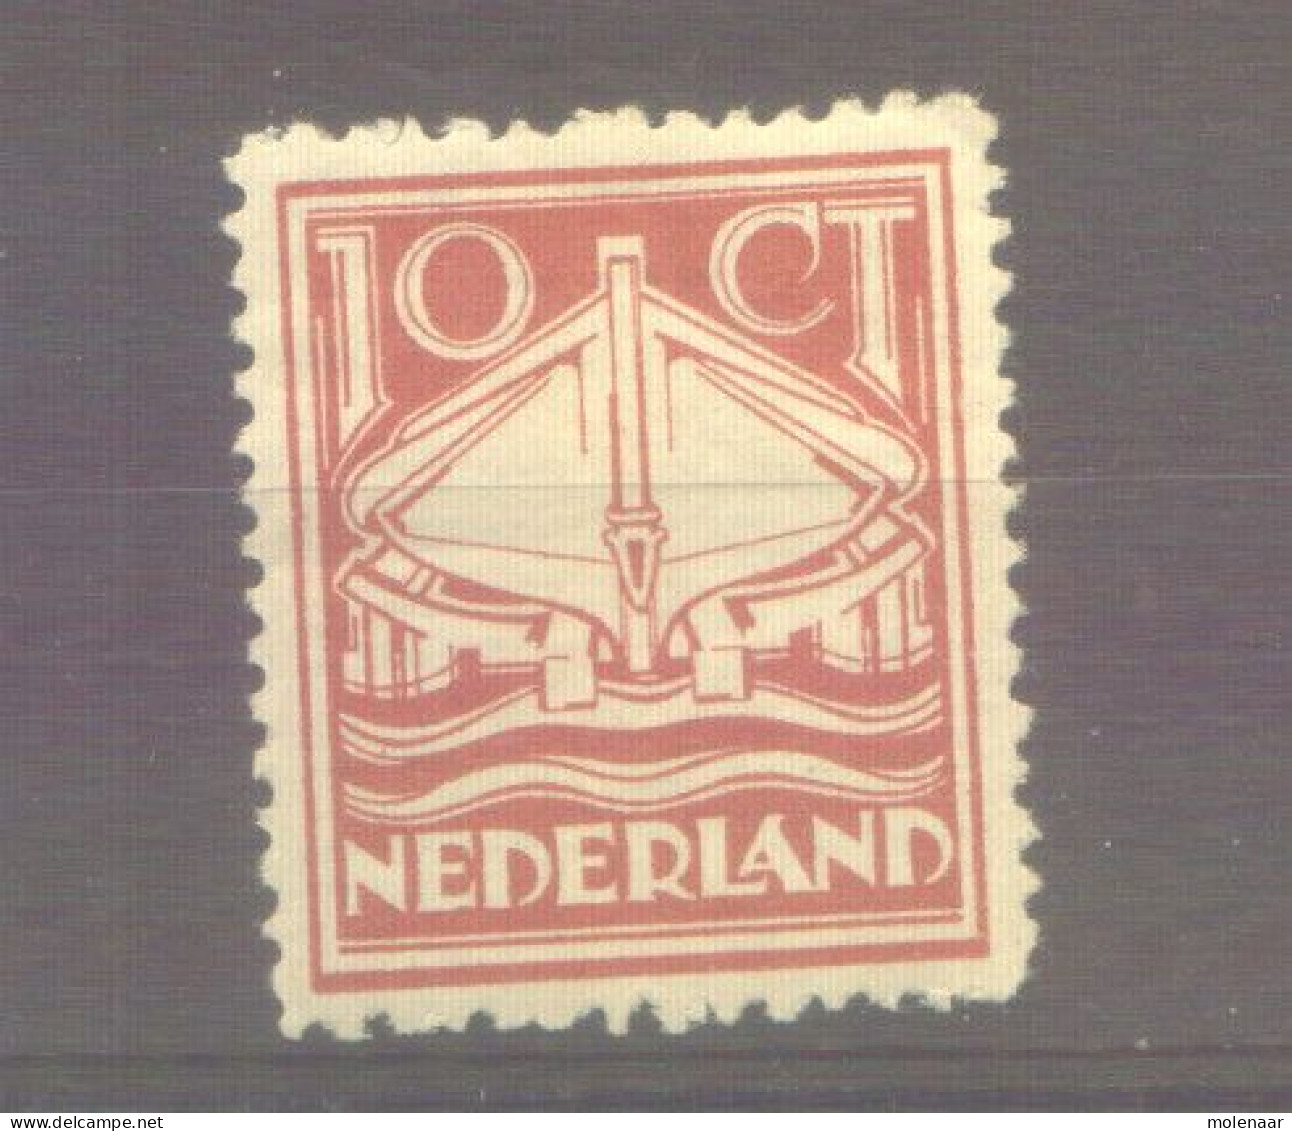 Postzegels > Europa > Nederland > Periode 1891-1948 (Wilhelmina) > 1910-29 > Ongebruikt No 140 (11868) - Neufs